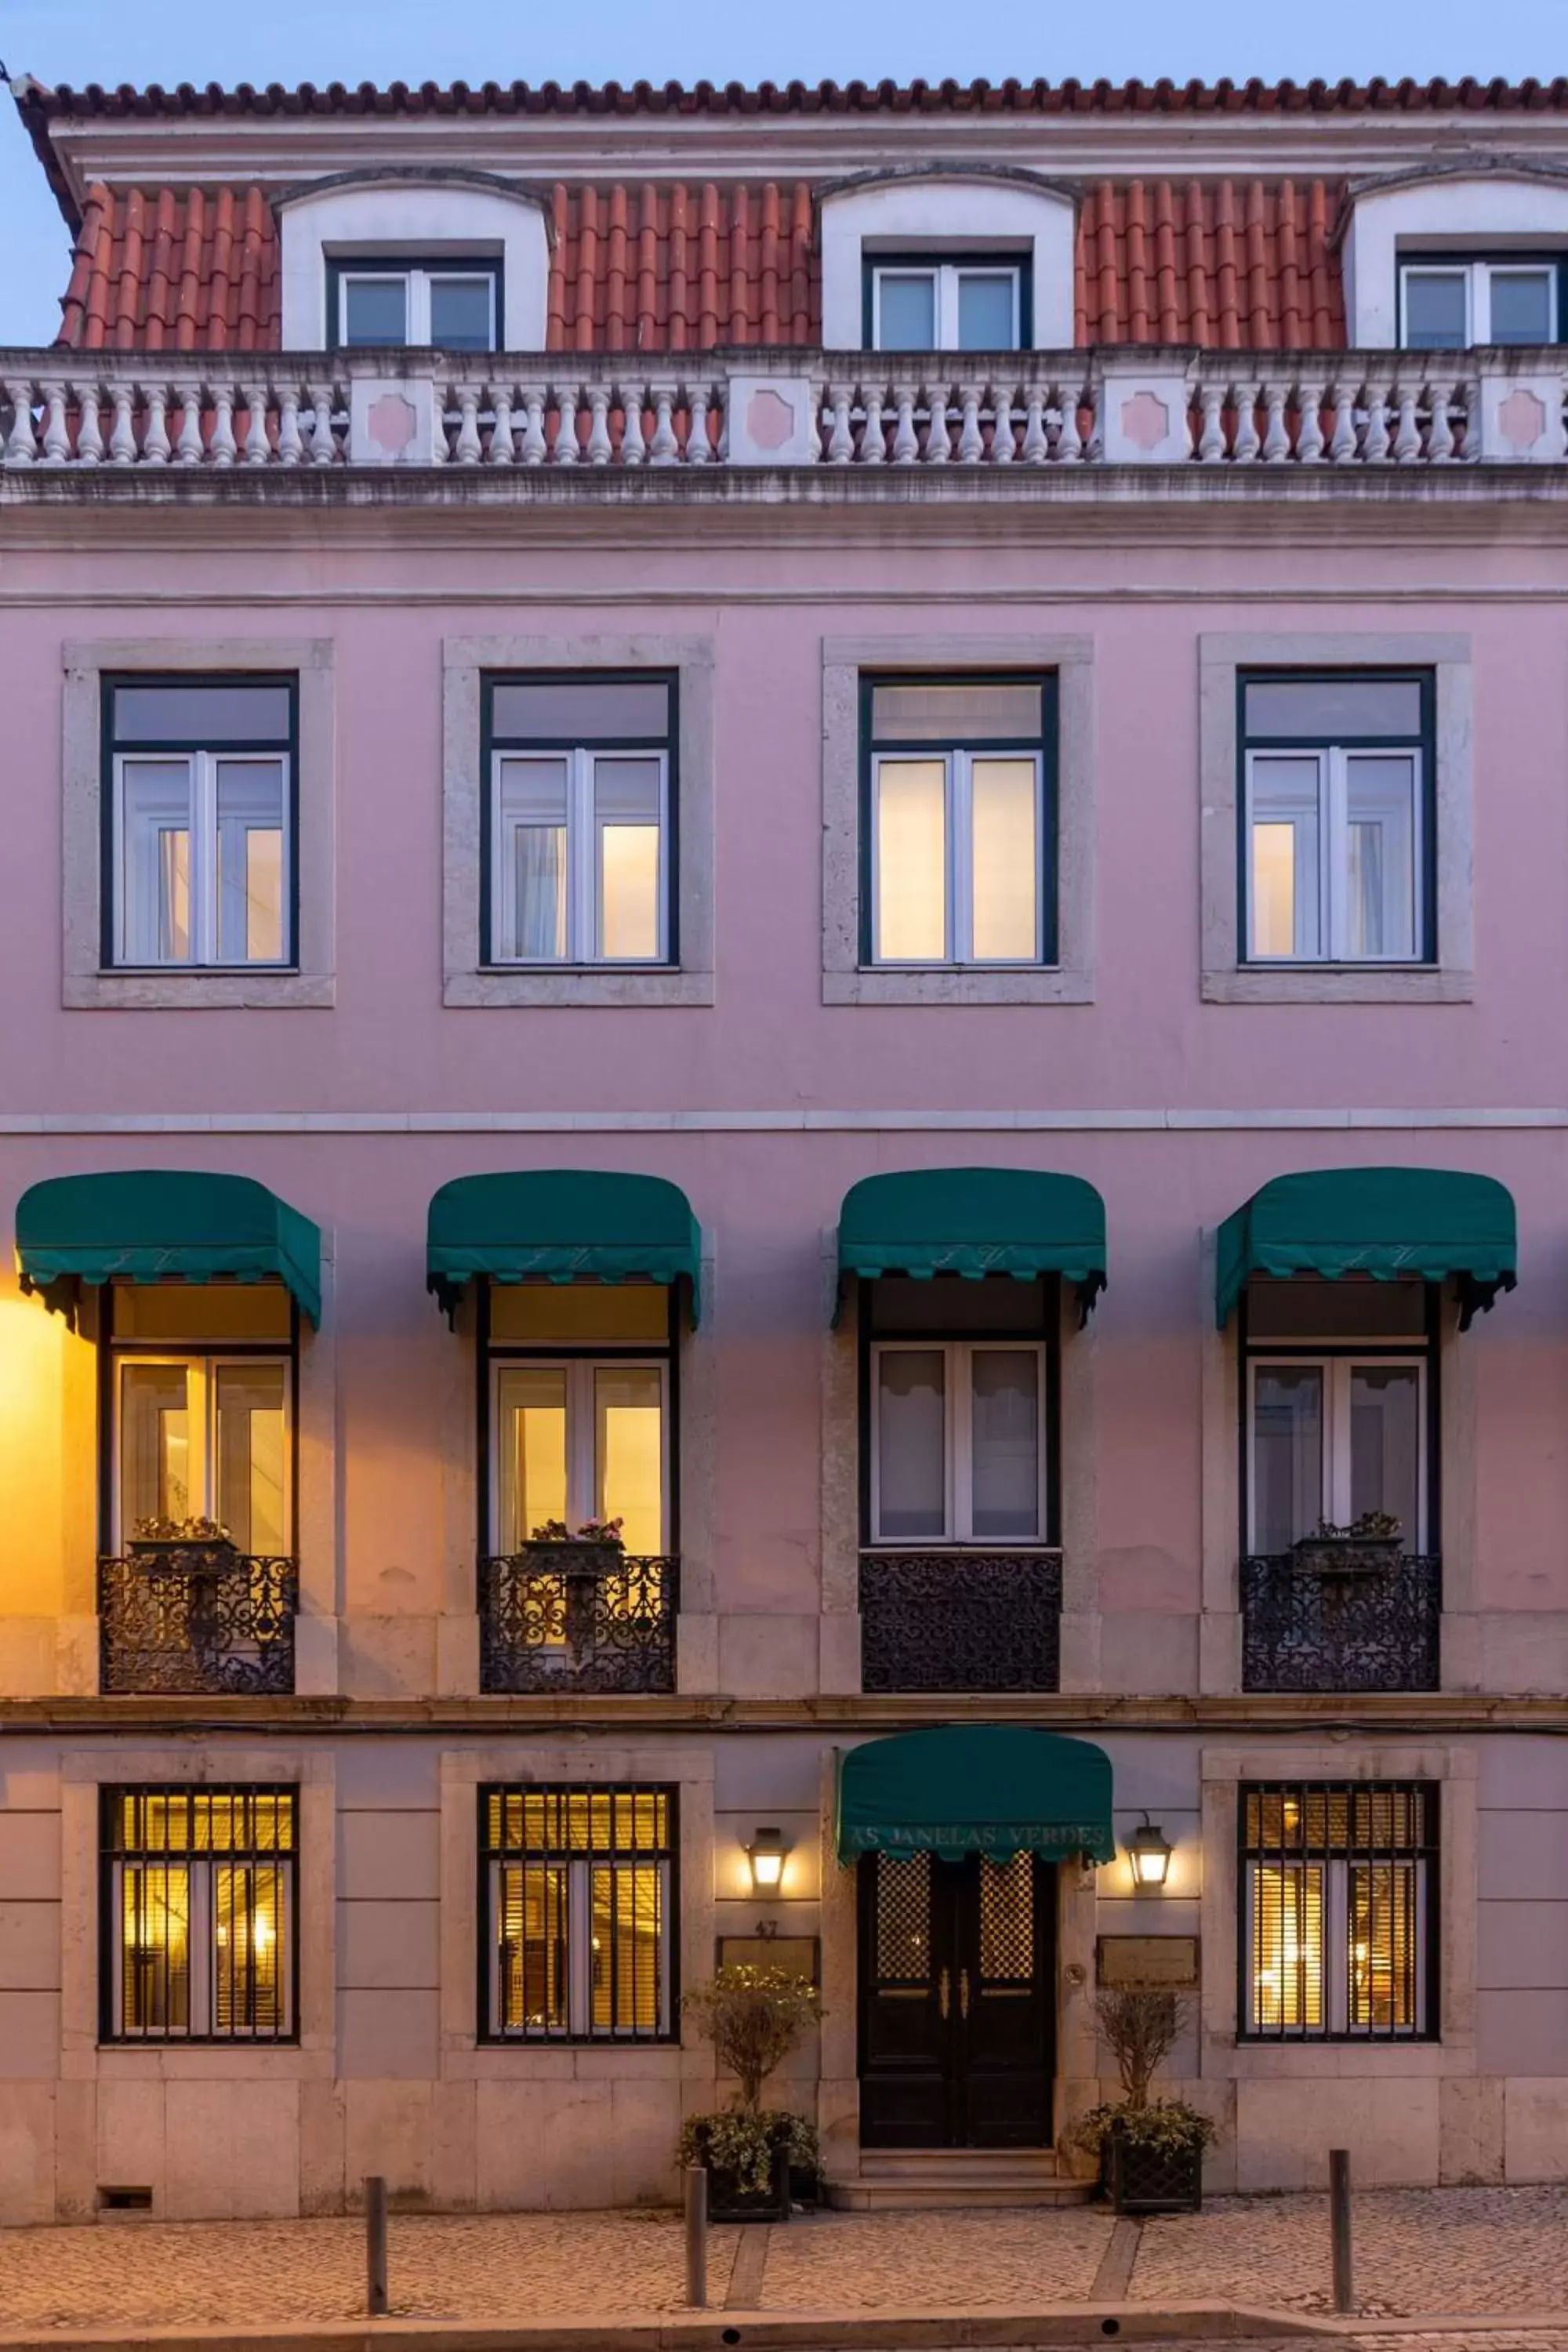 Property Building in As Janelas Verdes Inn - Lisbon Heritage Collection - Riverside